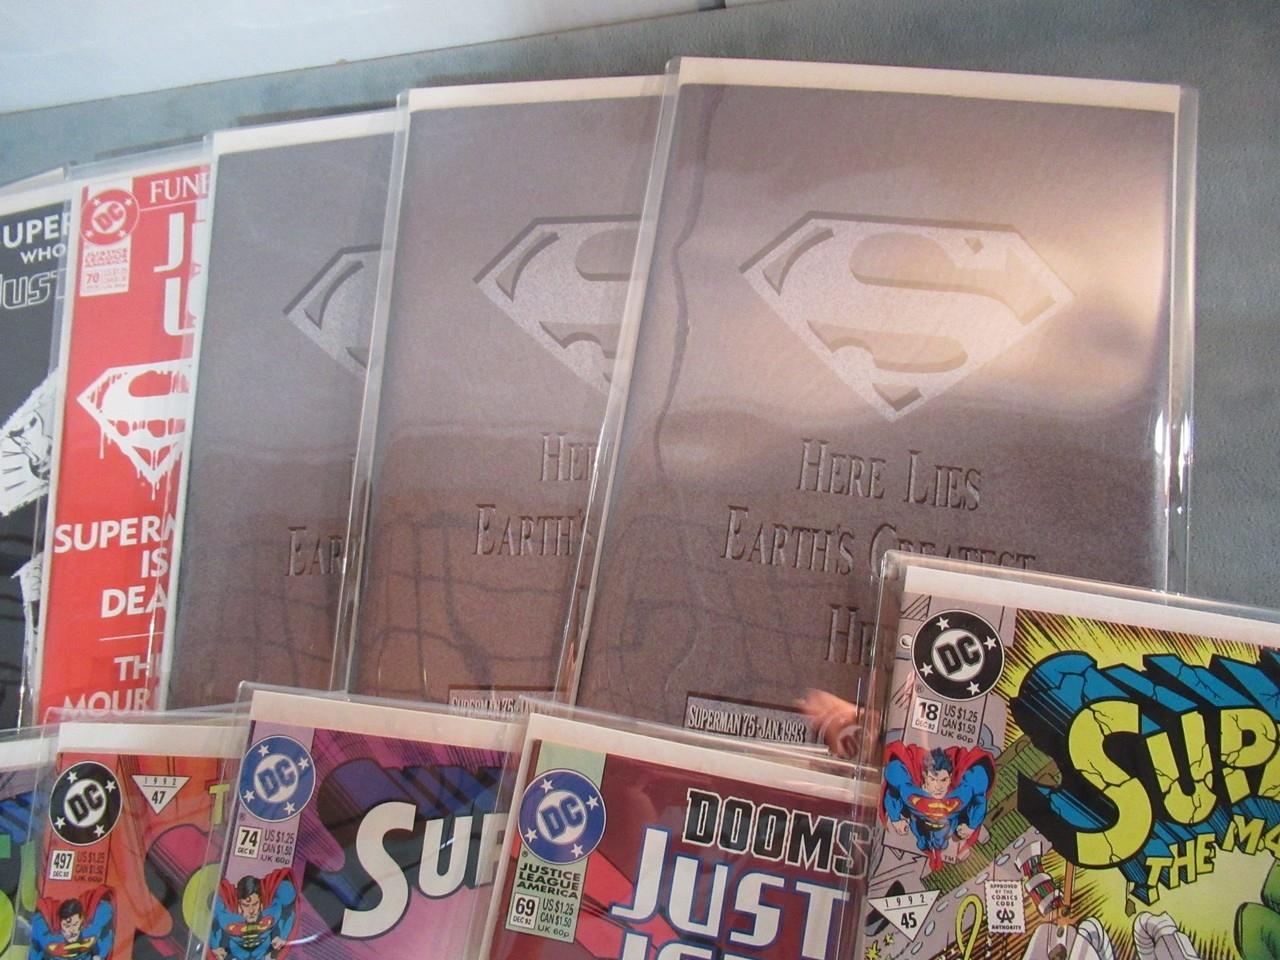 Death of Superman Era Comic Lot